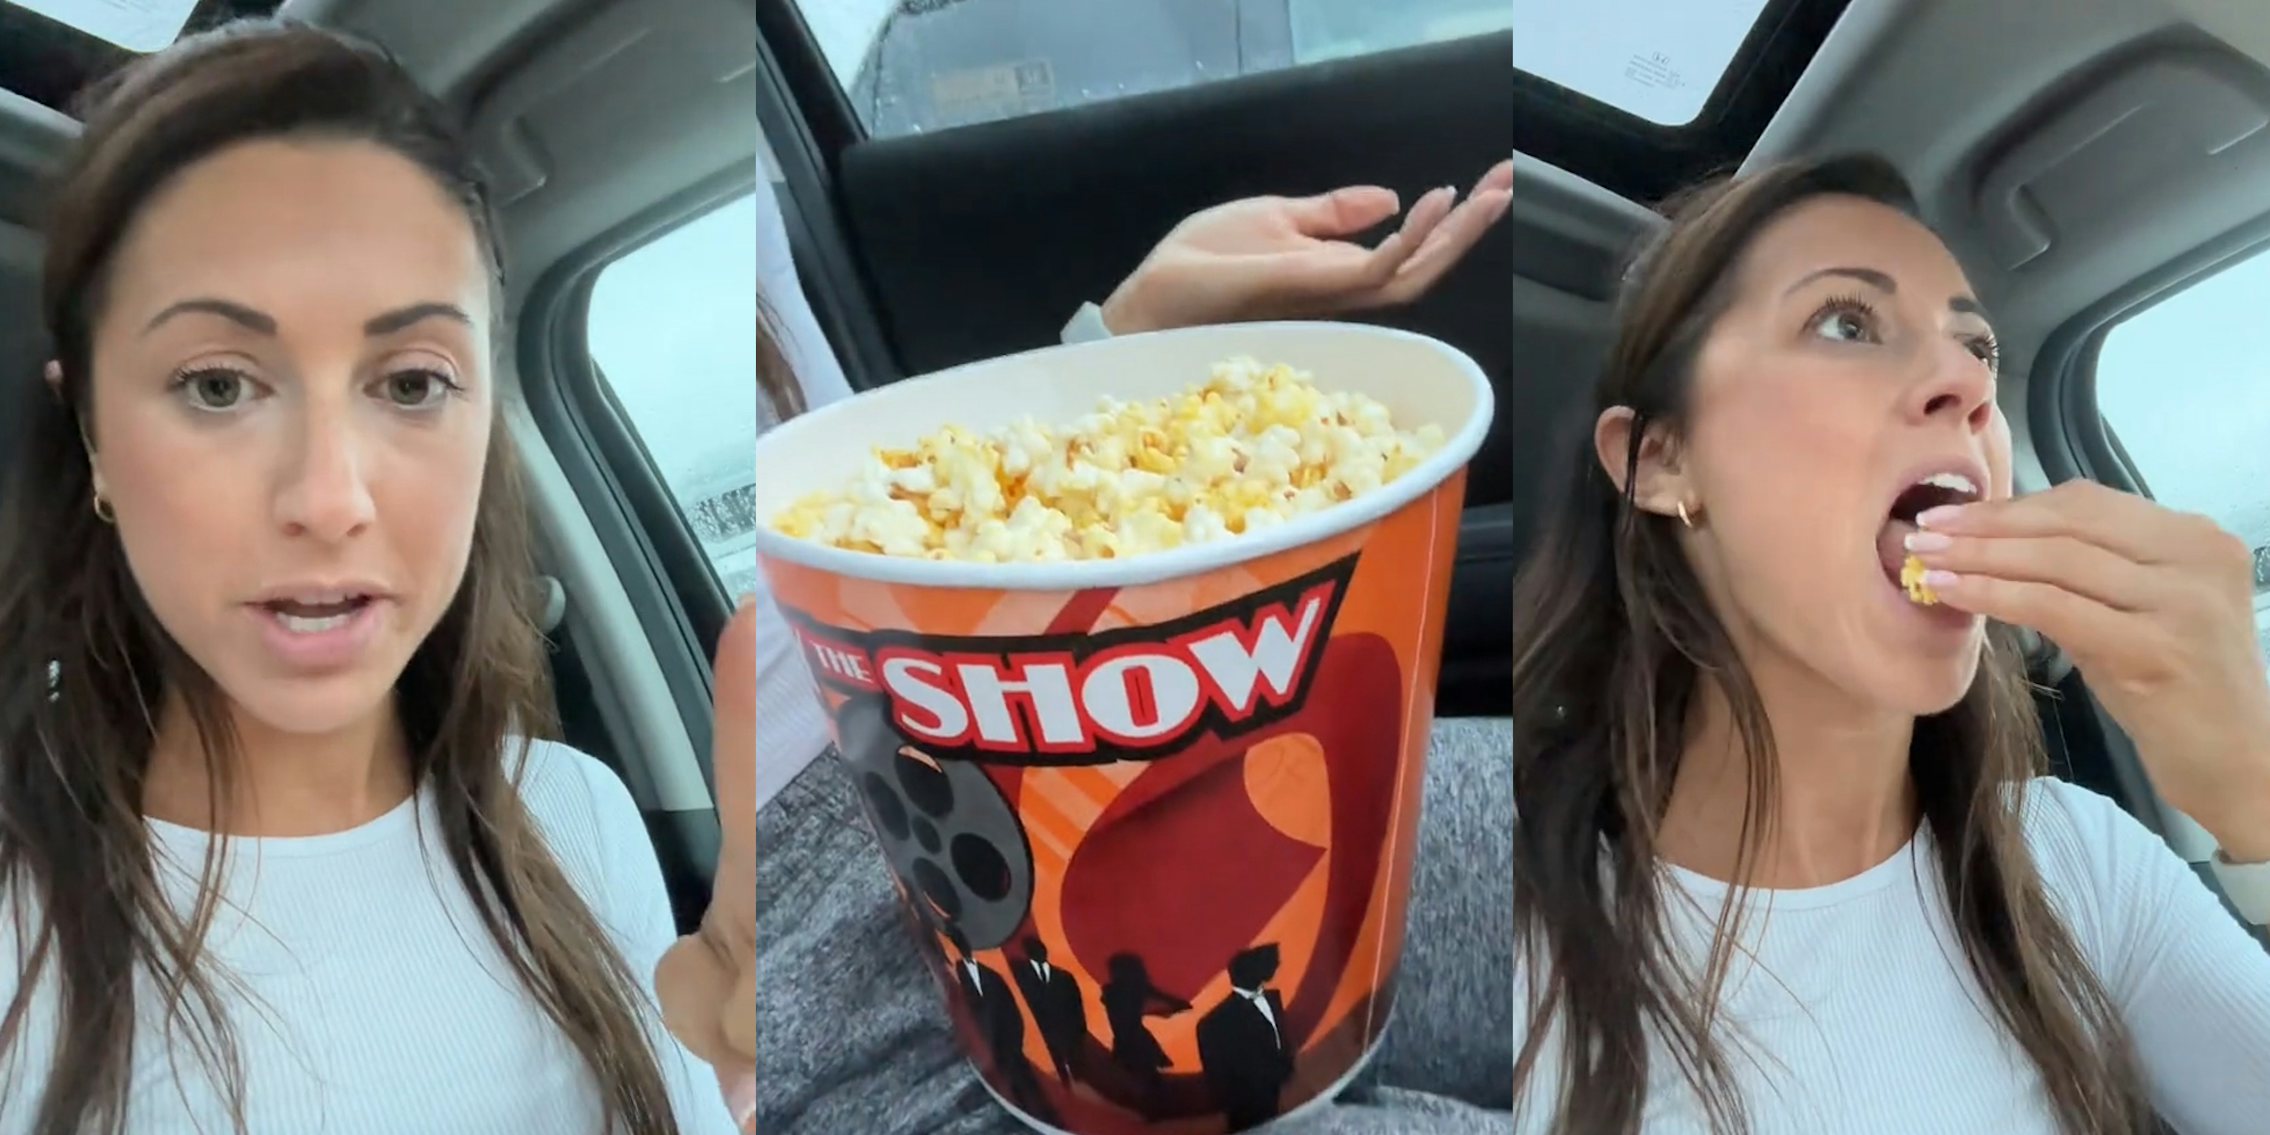 woman speaking in car (l) movie theater popcorn on woman's lap in car (c) woman eating popcorn in car (r)